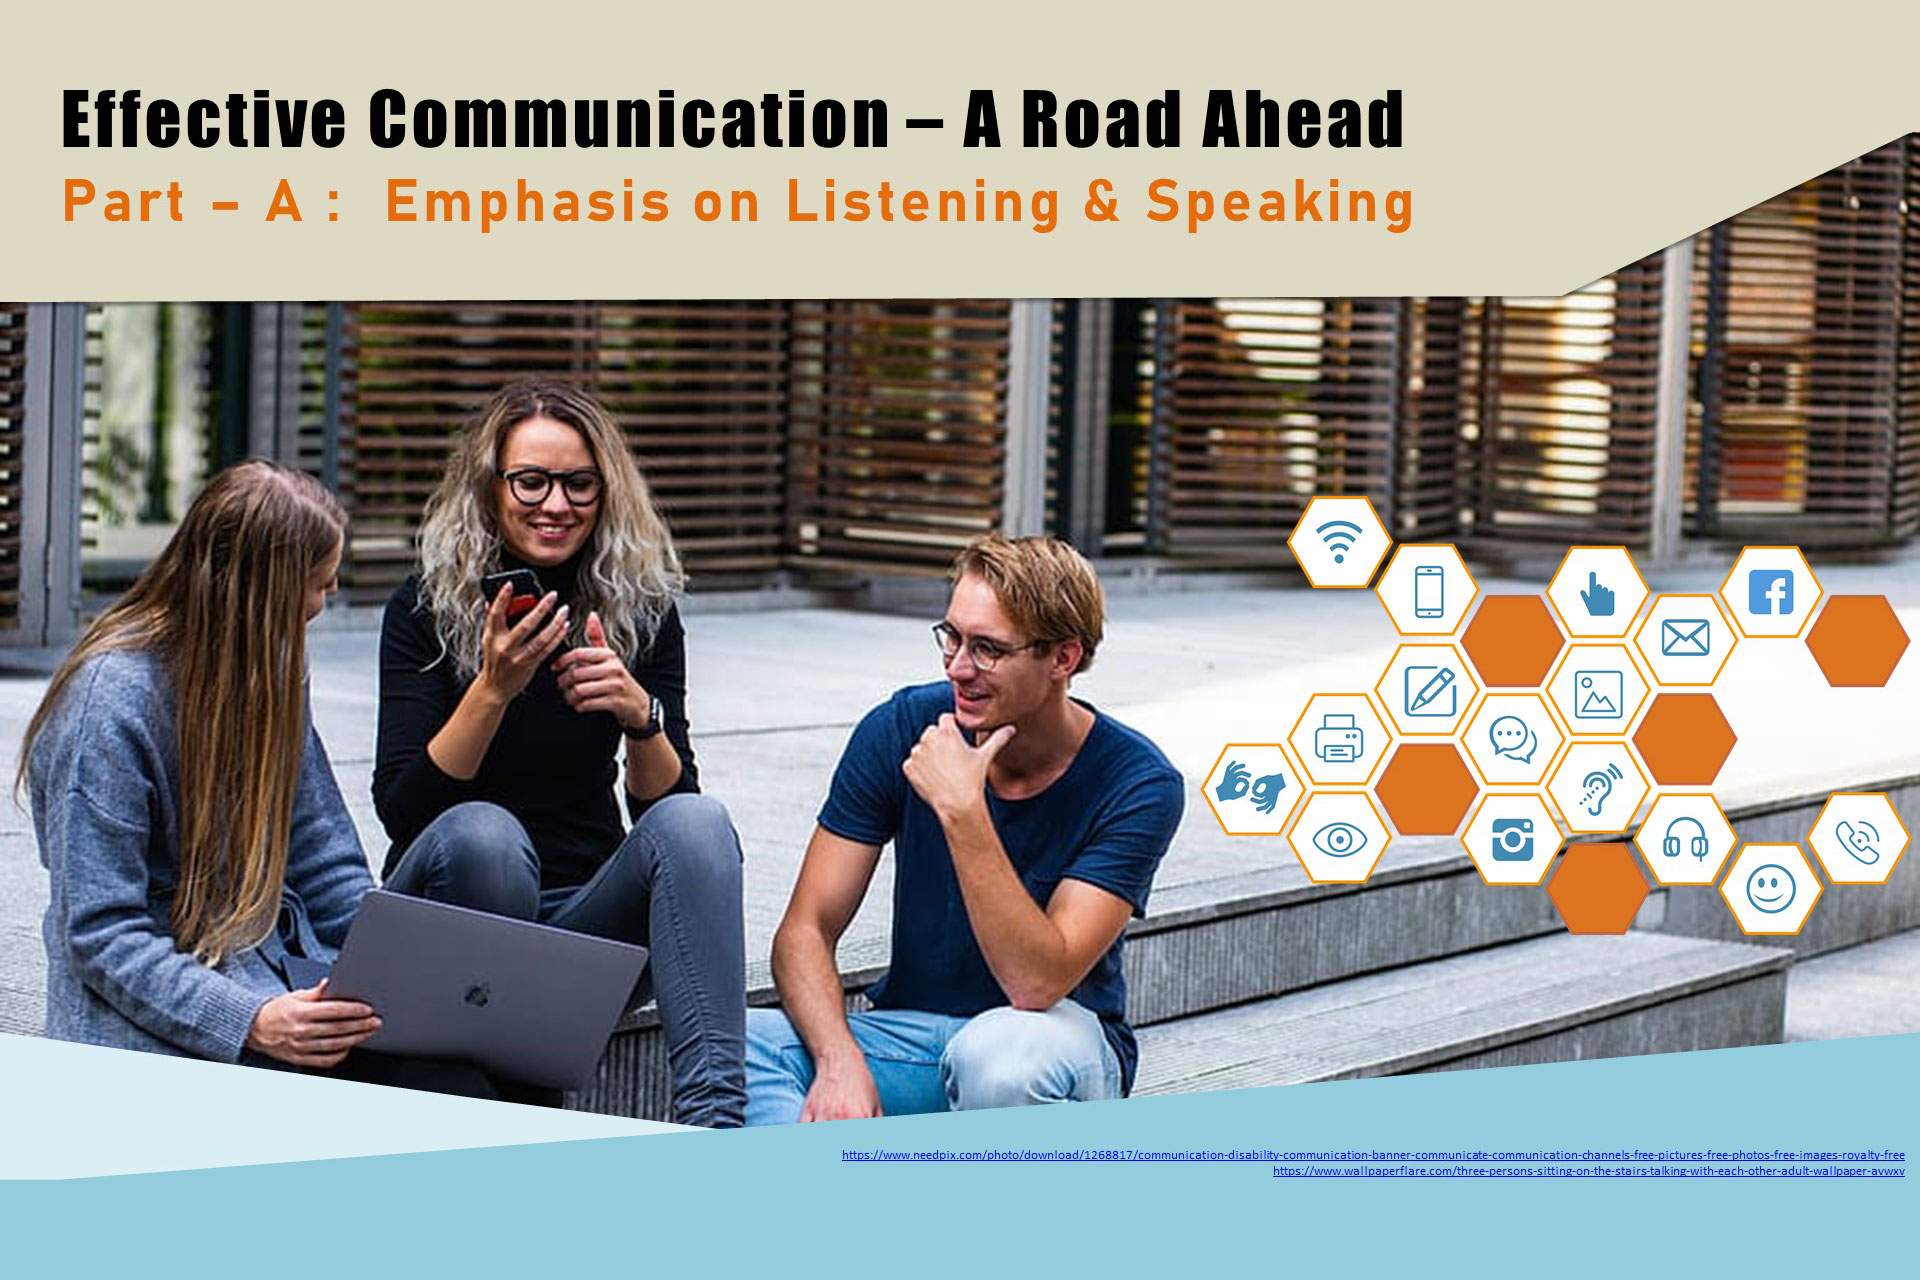 communication-skills